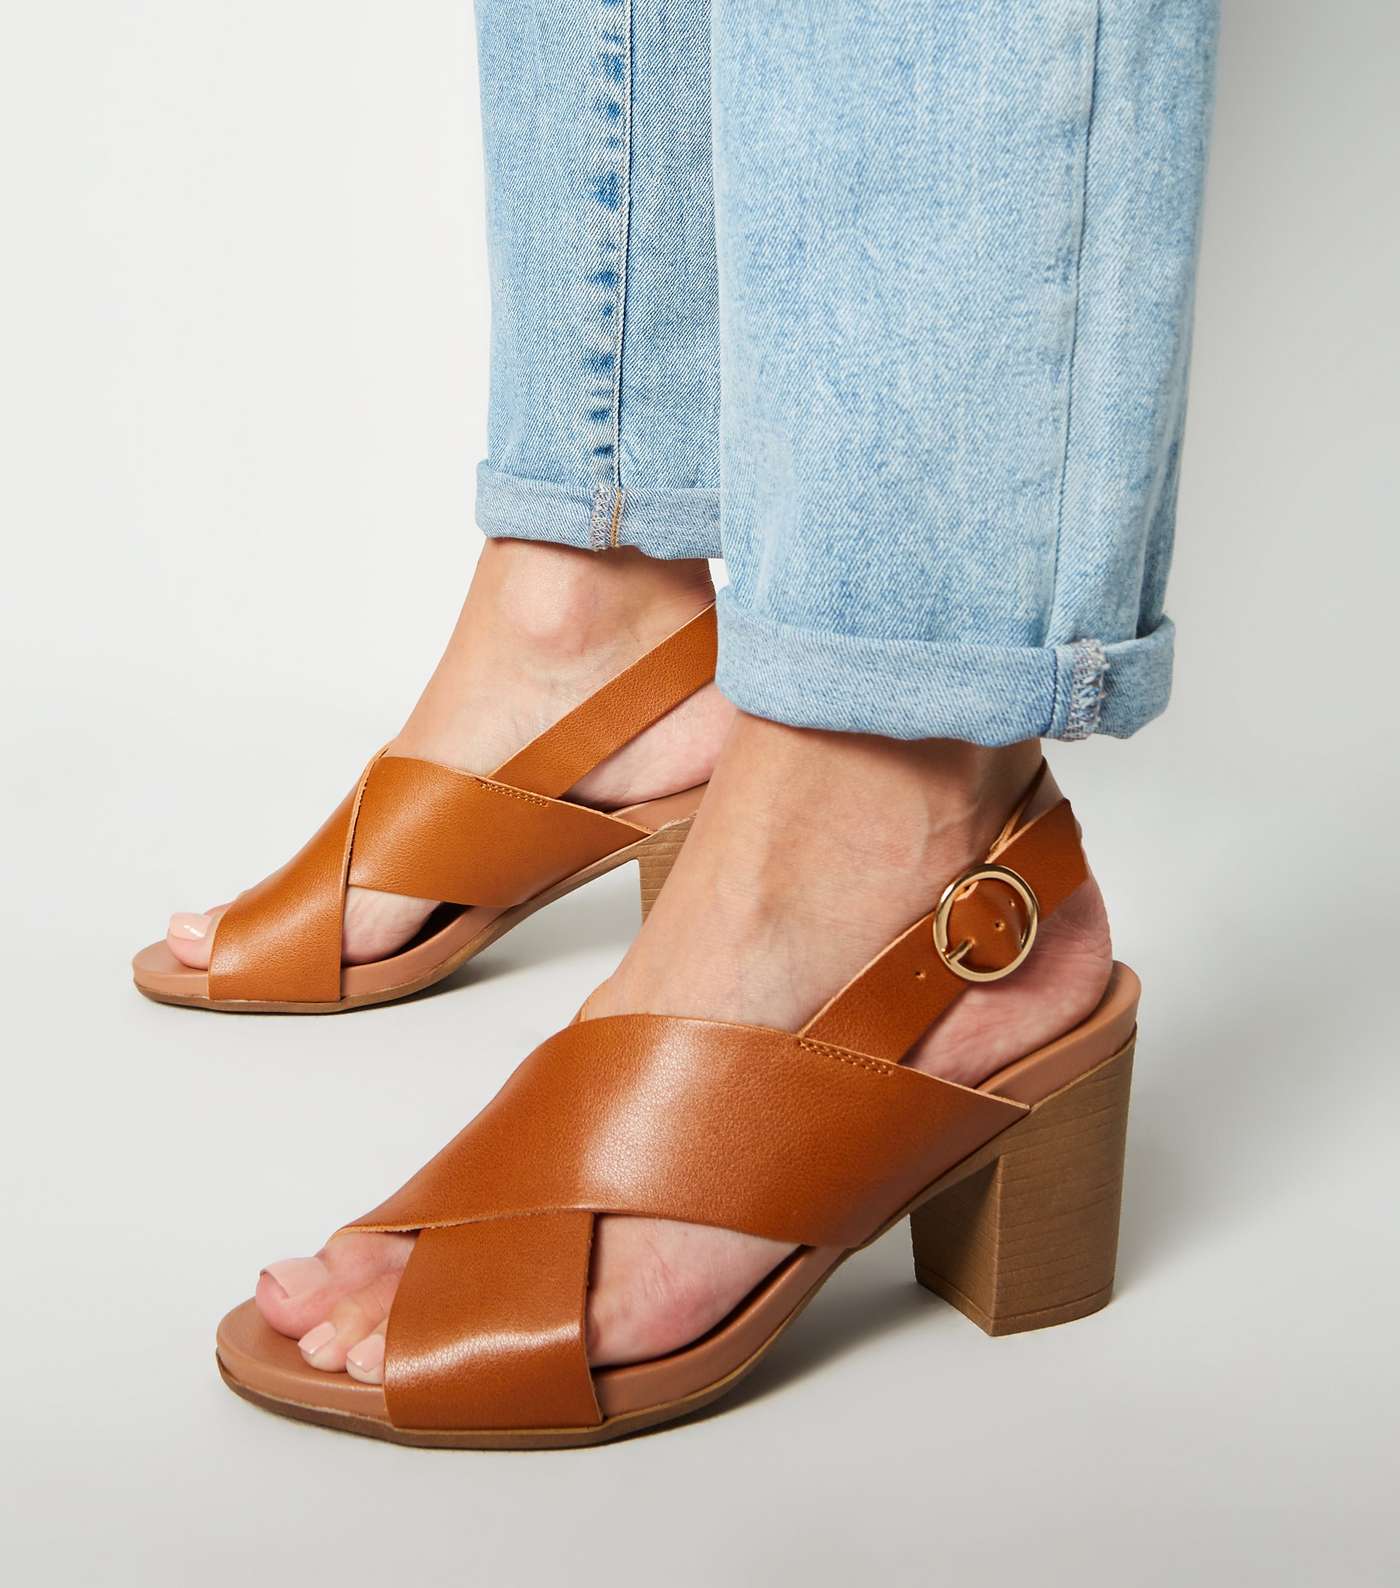 Tan Leather-Look Cross Strap Heels Image 2